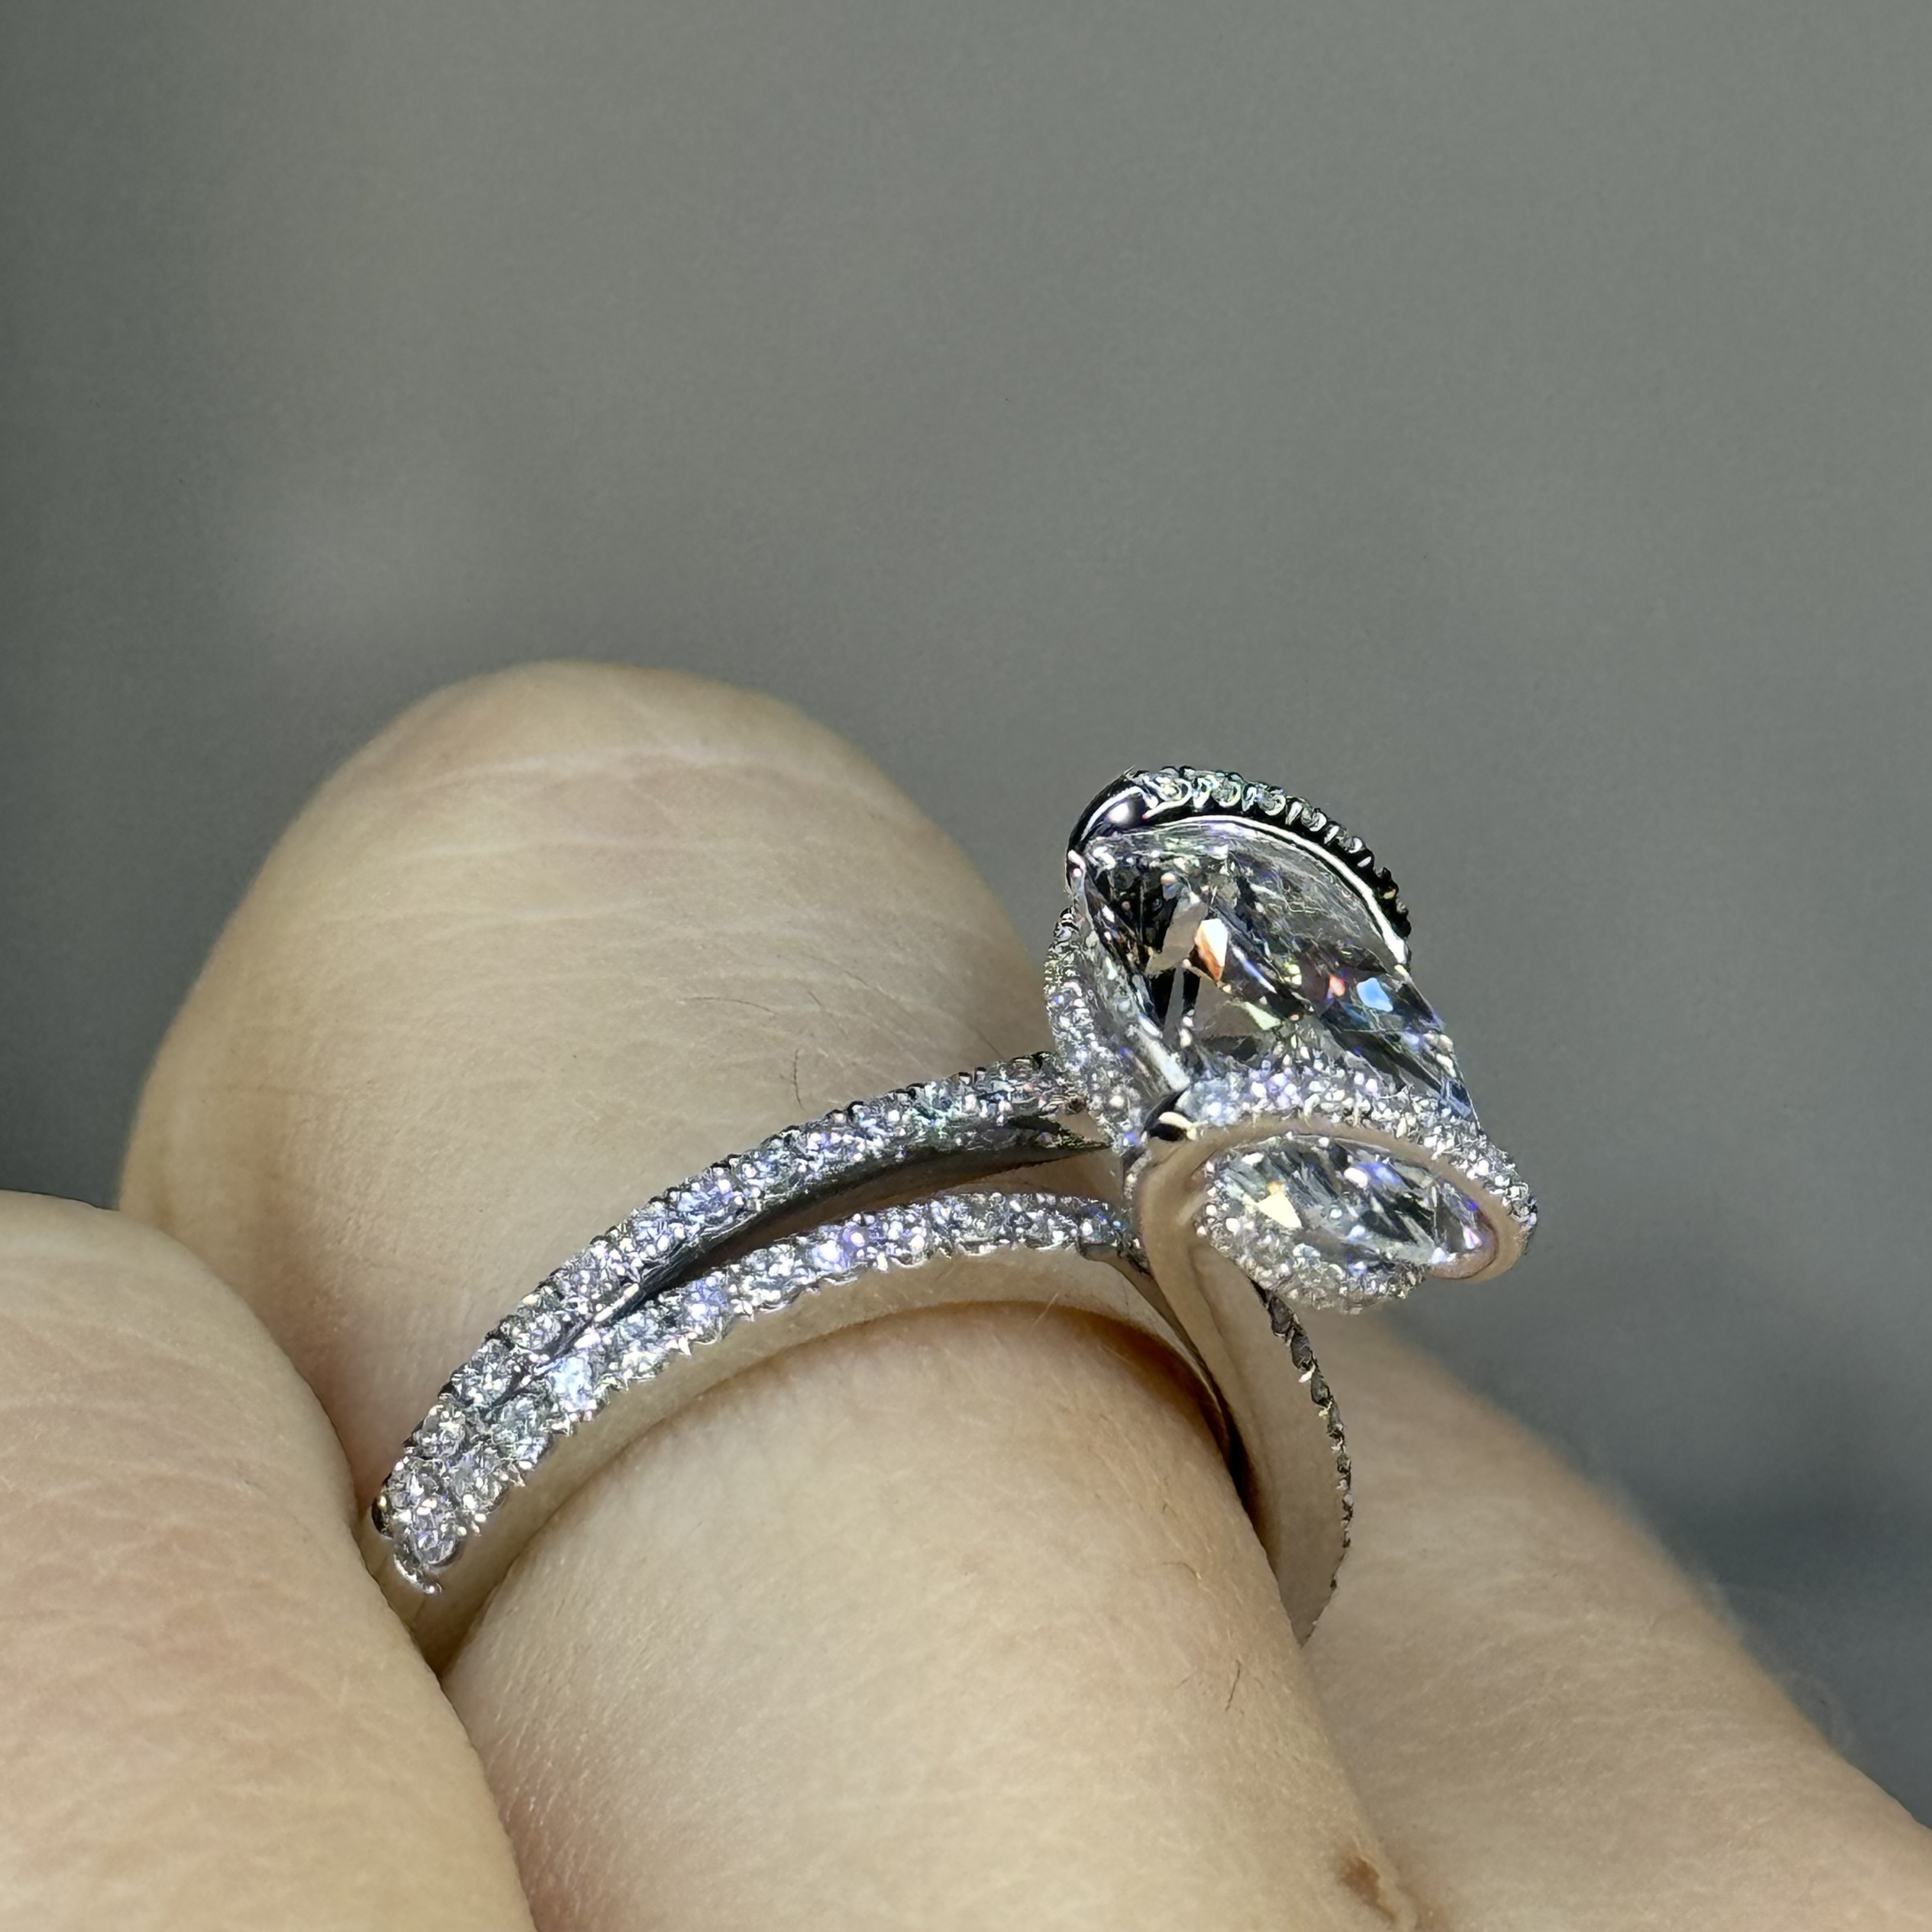 GIA 4.54 E VS2 Oval "Hailey" Engagement Ring Image 2 Forever Diamonds New York, NY